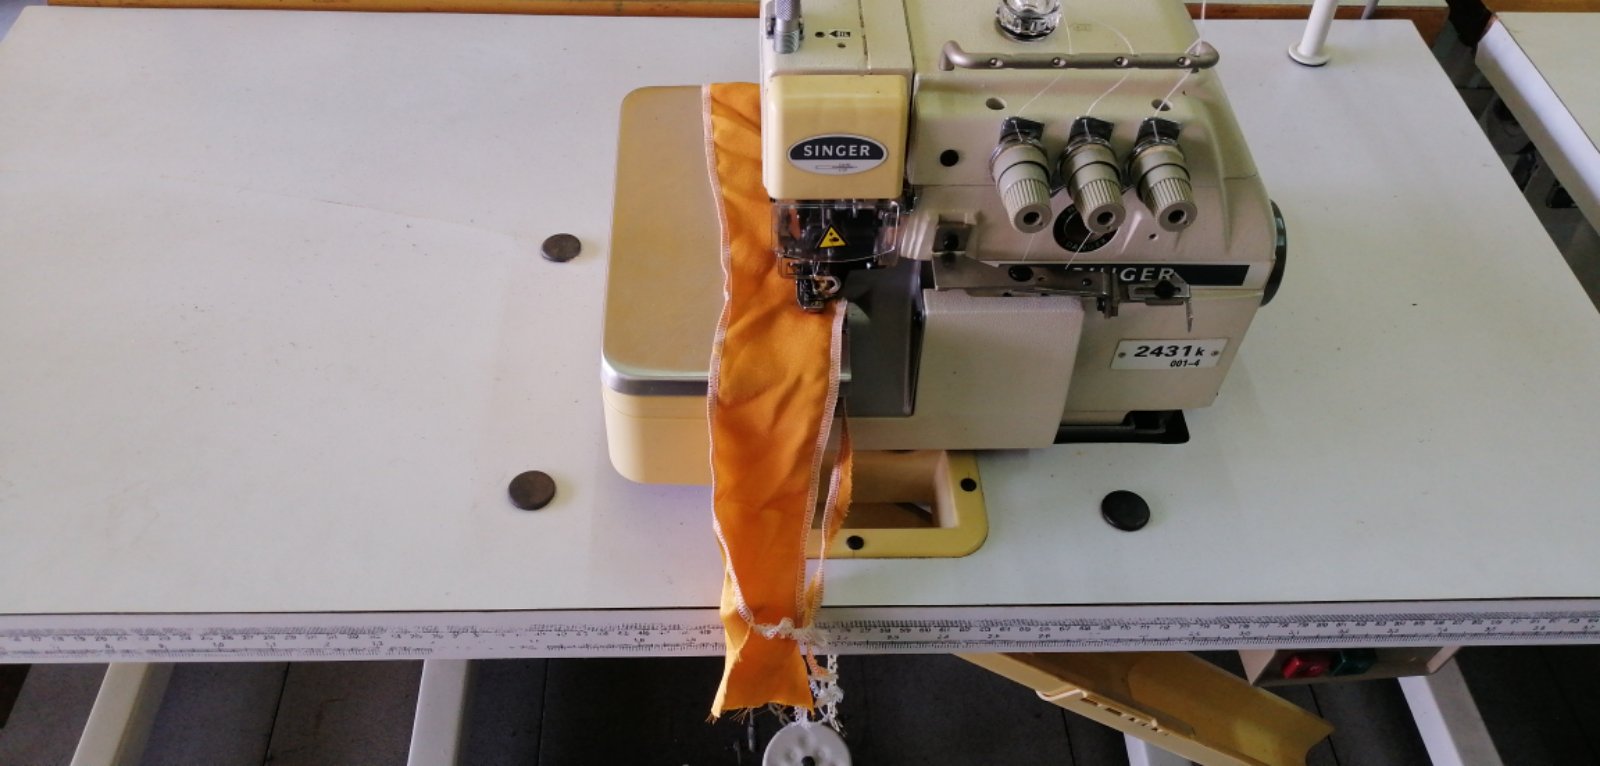 2nd Singer Overlock Industrial Sewing Machine